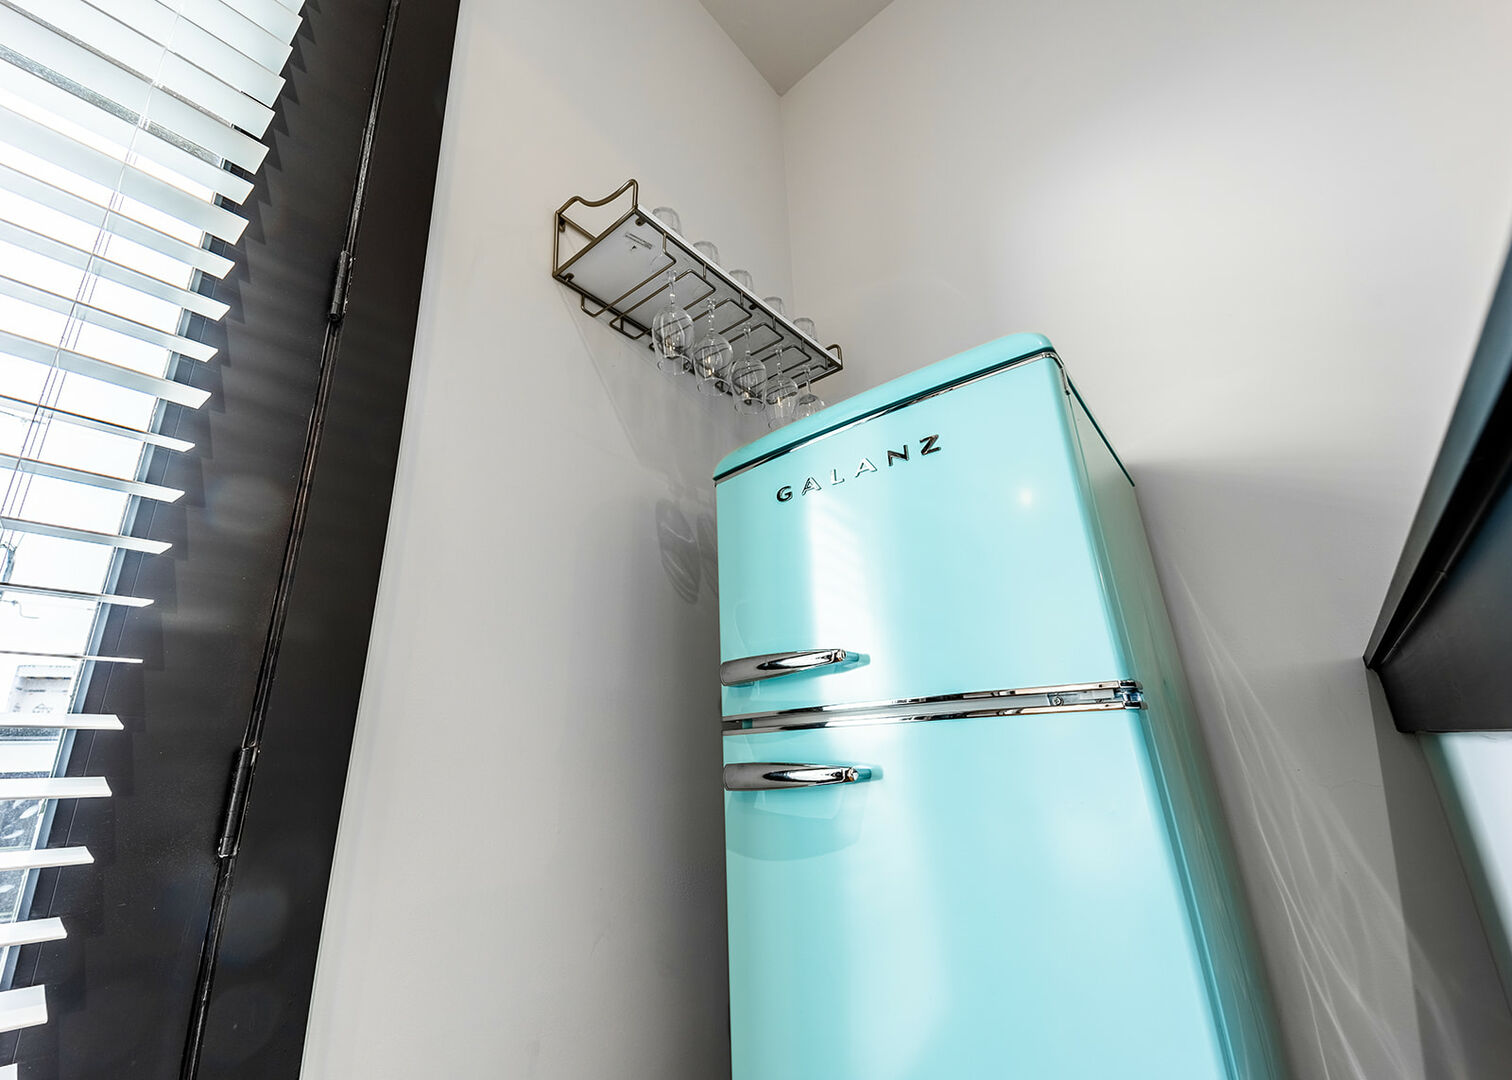 Unit 3: Designer fridge with wine glass rack.